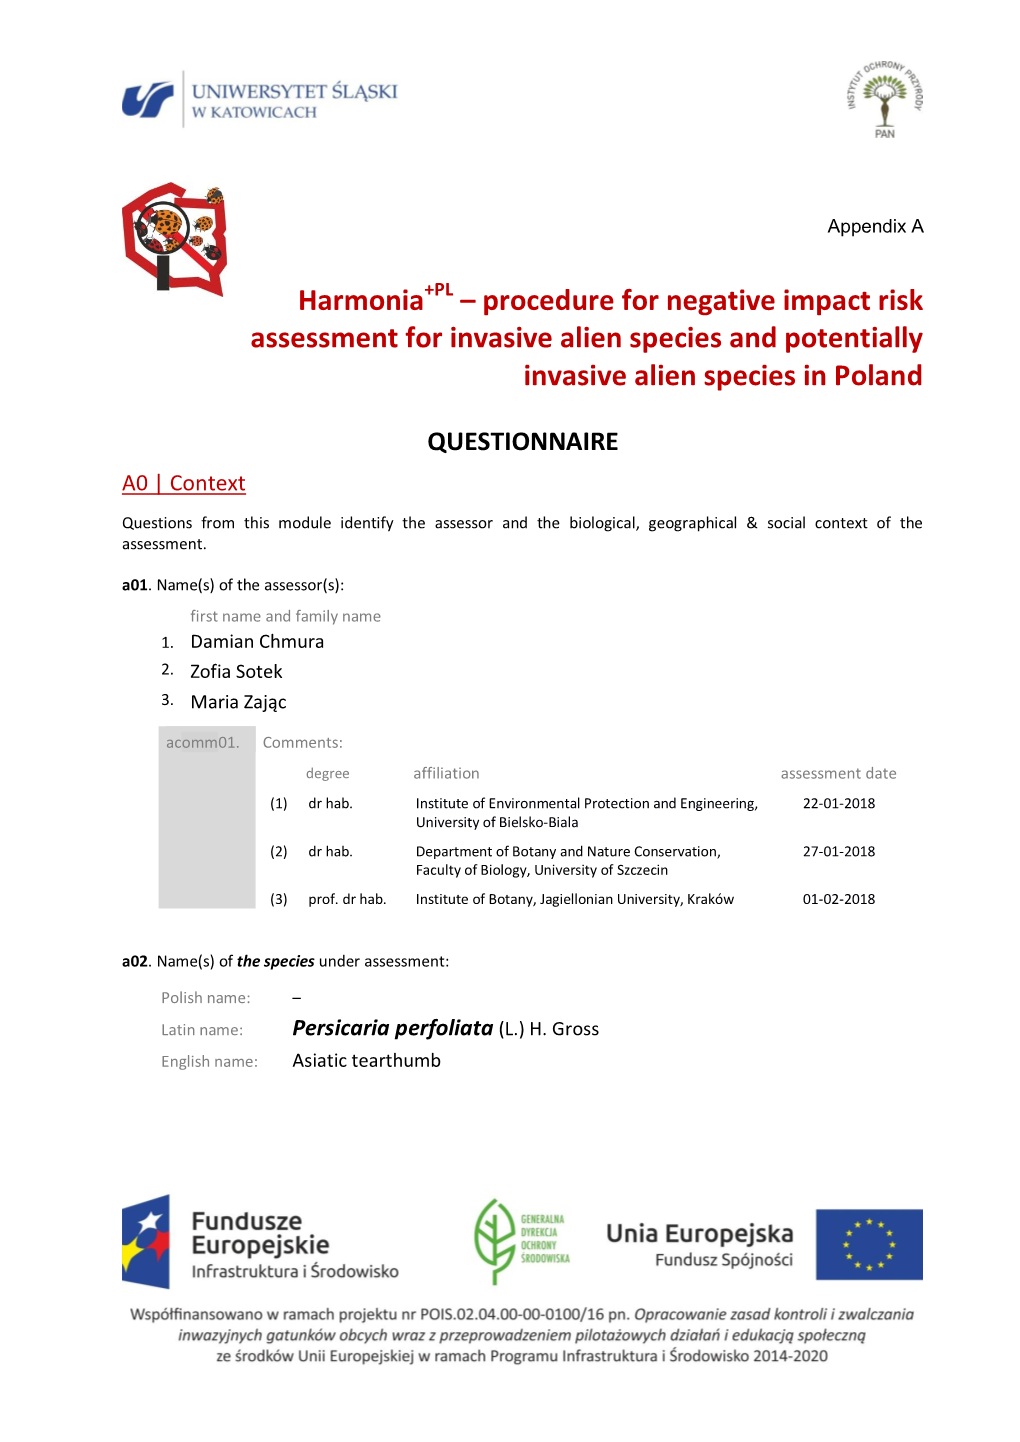 Harmonia+PL – Procedure for Negative Impact Risk Assessment for Invasive Alien Species and Potentially Invasive Alien Species in Poland